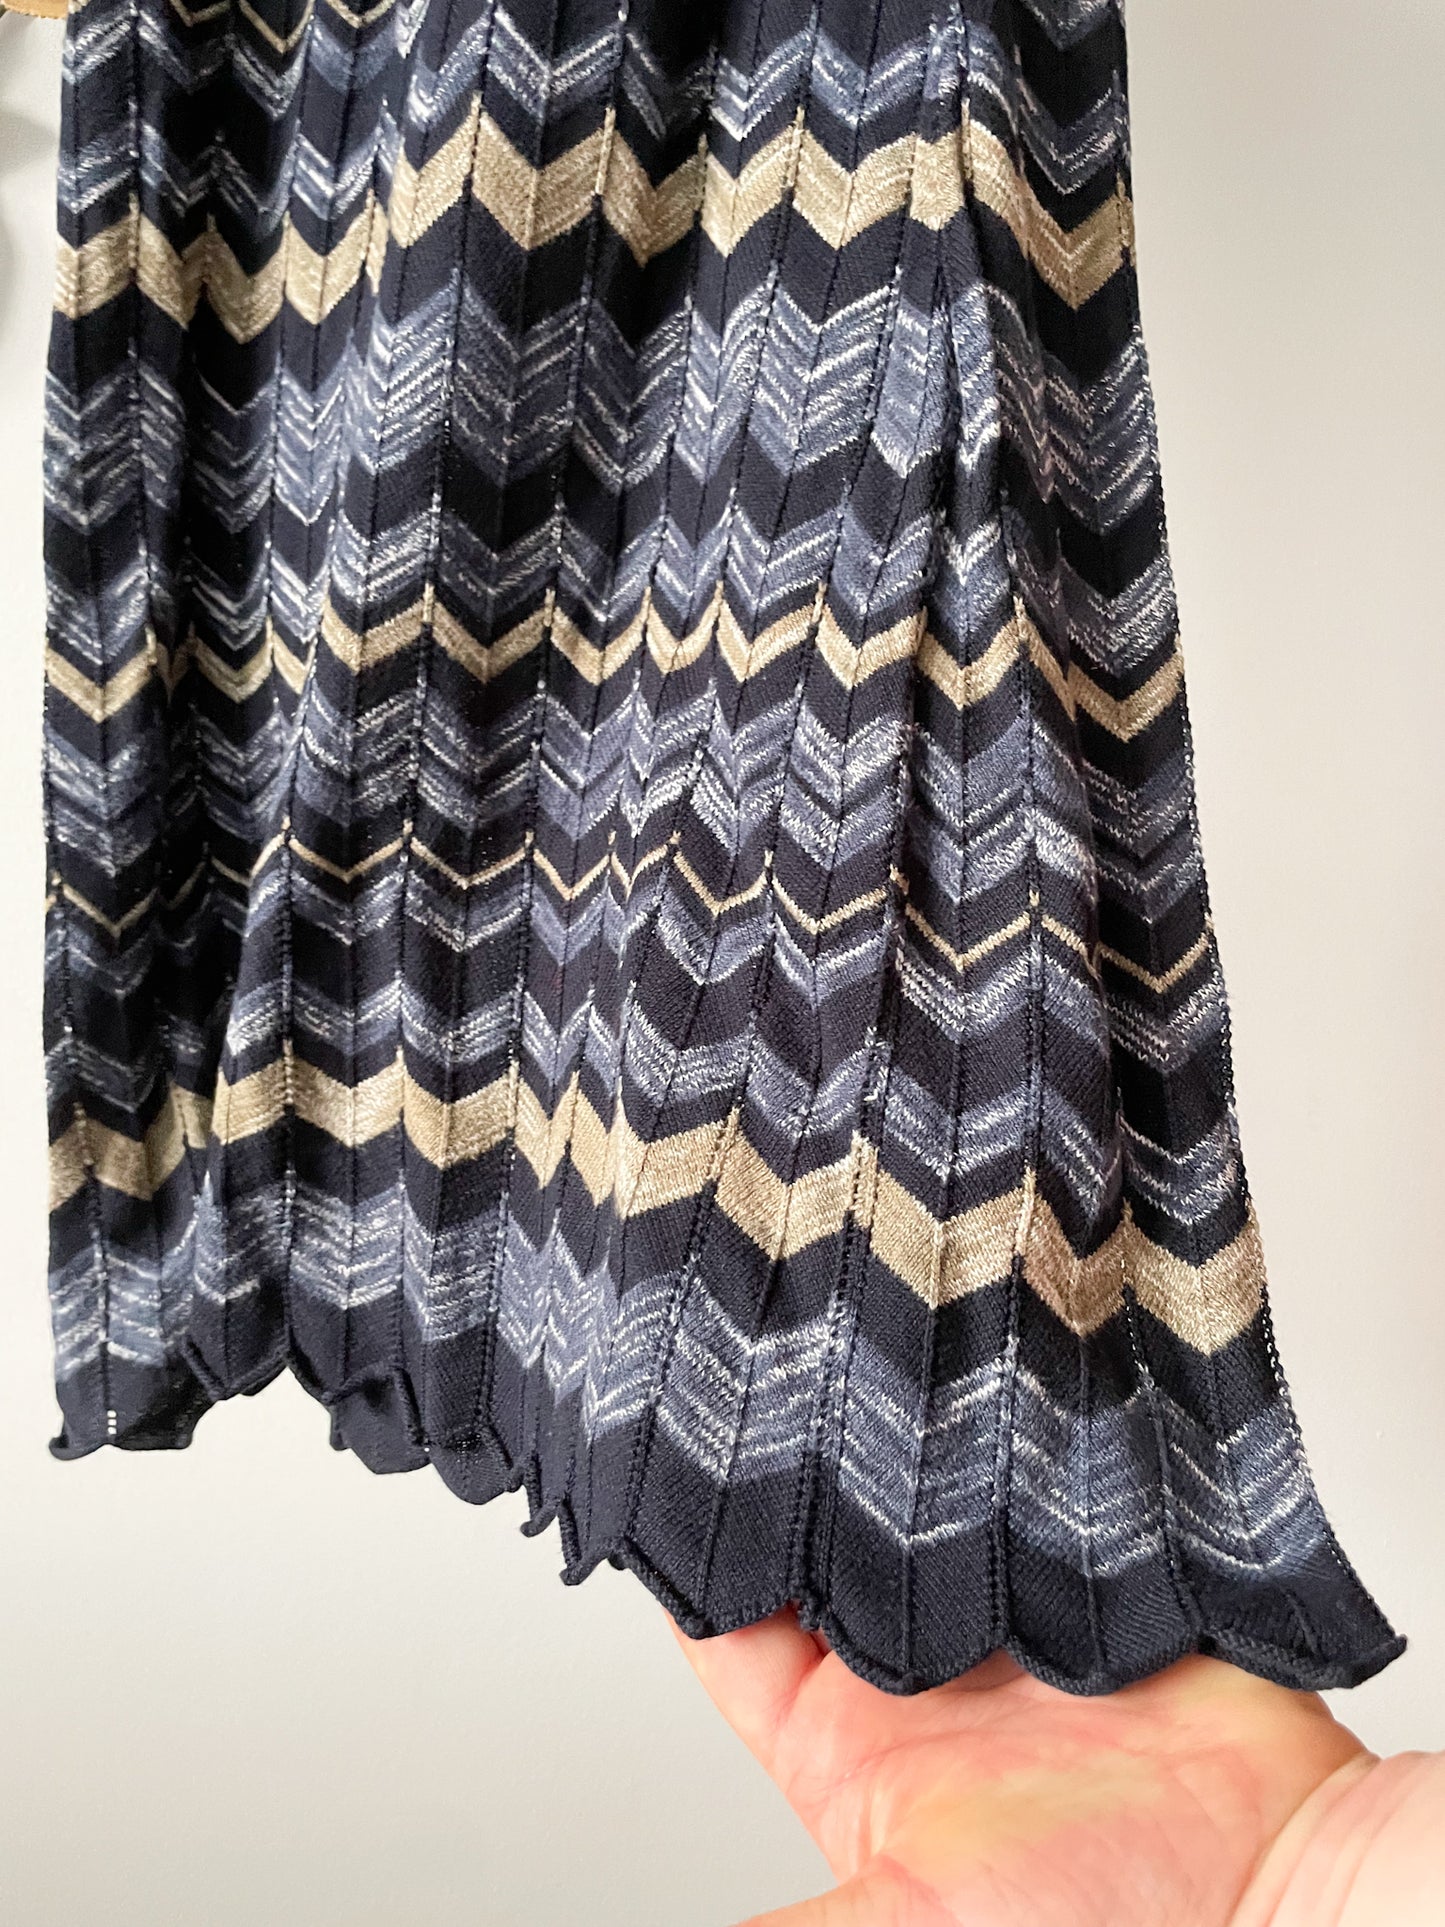 Blue Taupe Chevron 100% Cotton Knit Halter Sheath Dress - XS/S